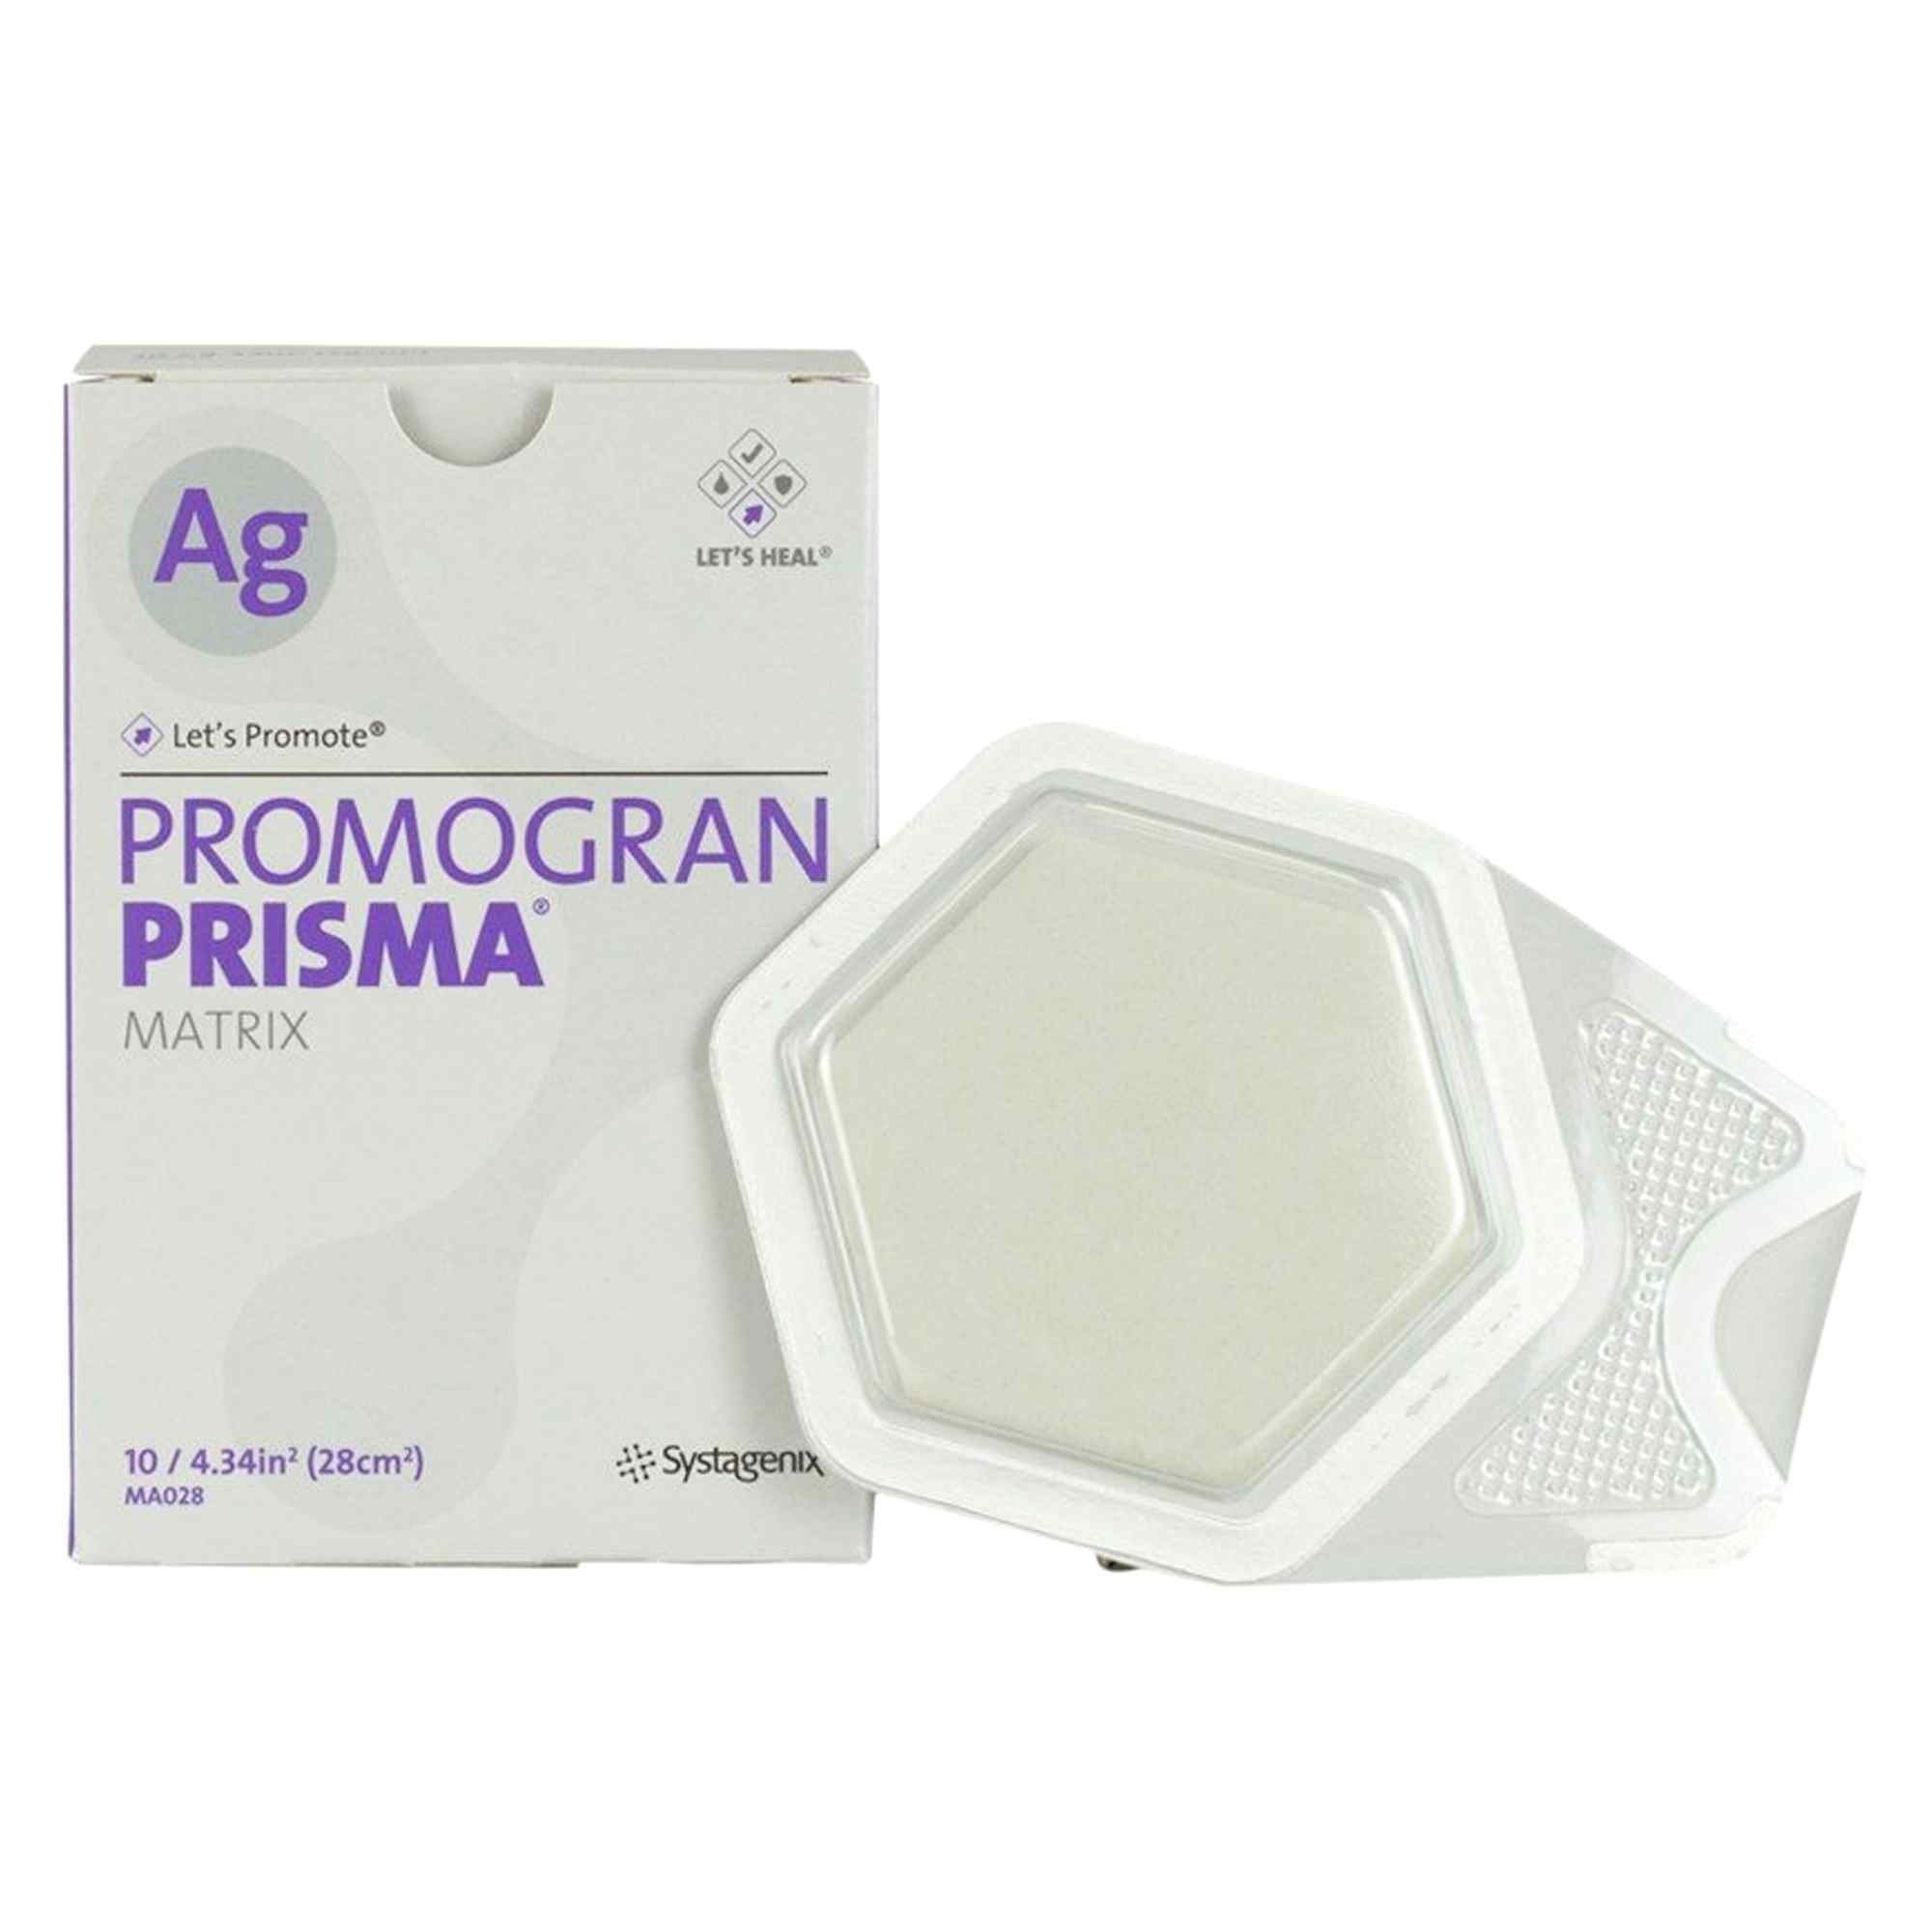 3M Promogran Prisma Collagen Matrix with ORC and Silver